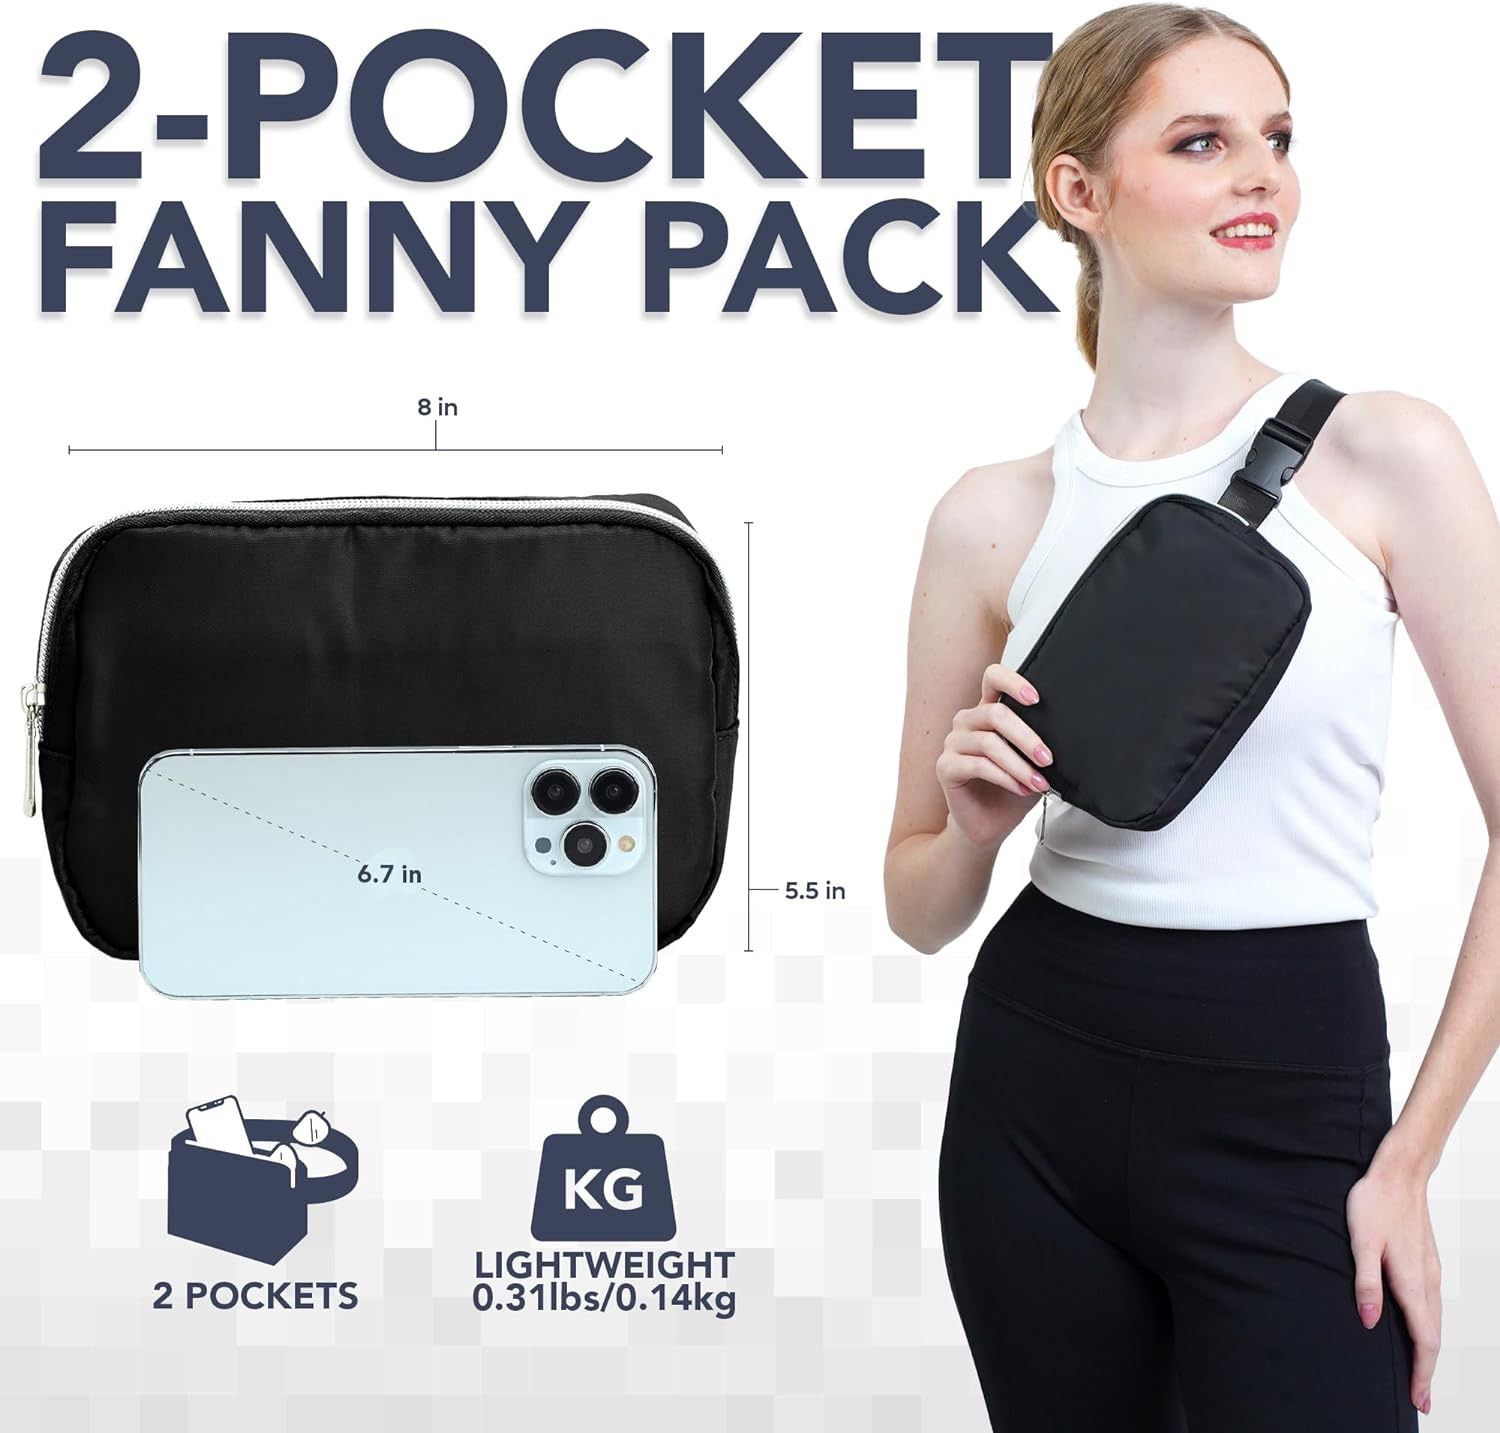 Black Fanny Pack Belt Bag for Women I Cross Body Fanny Packs for Women - Crossbody Bags small Waist Bag Men - Fashion Waist Pack Bum Bag - Hands Free 